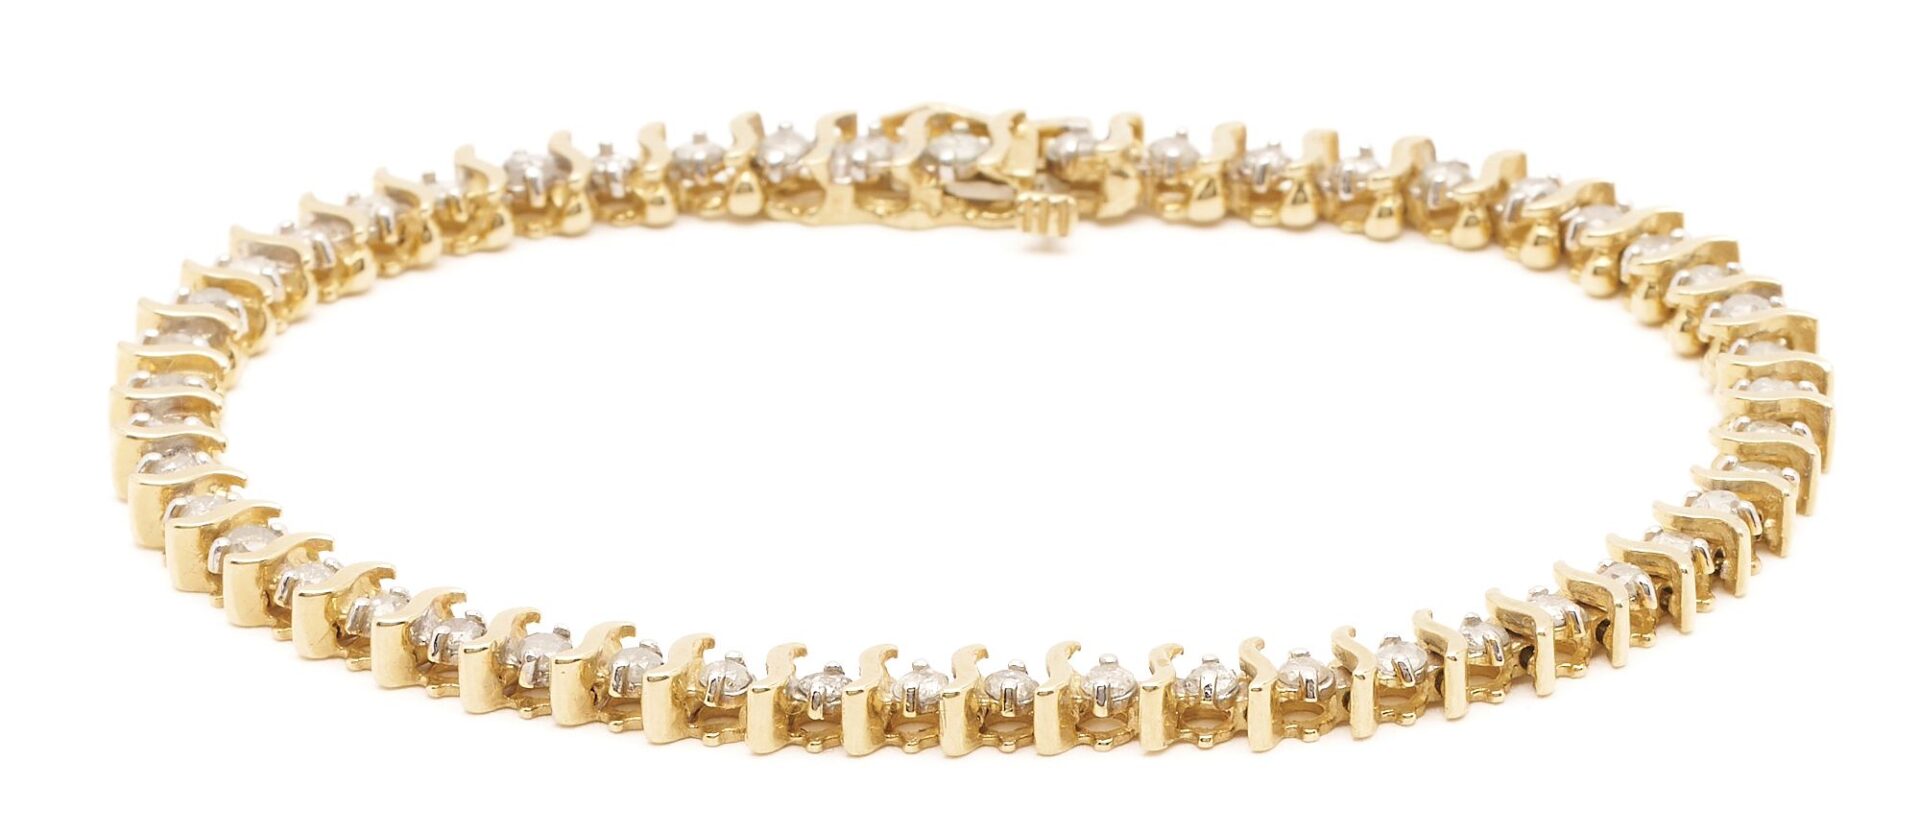 Lot 623: Two (2) Gold & Diamond Bracelets – One 14K White Gold & One 10K Yellow Gold